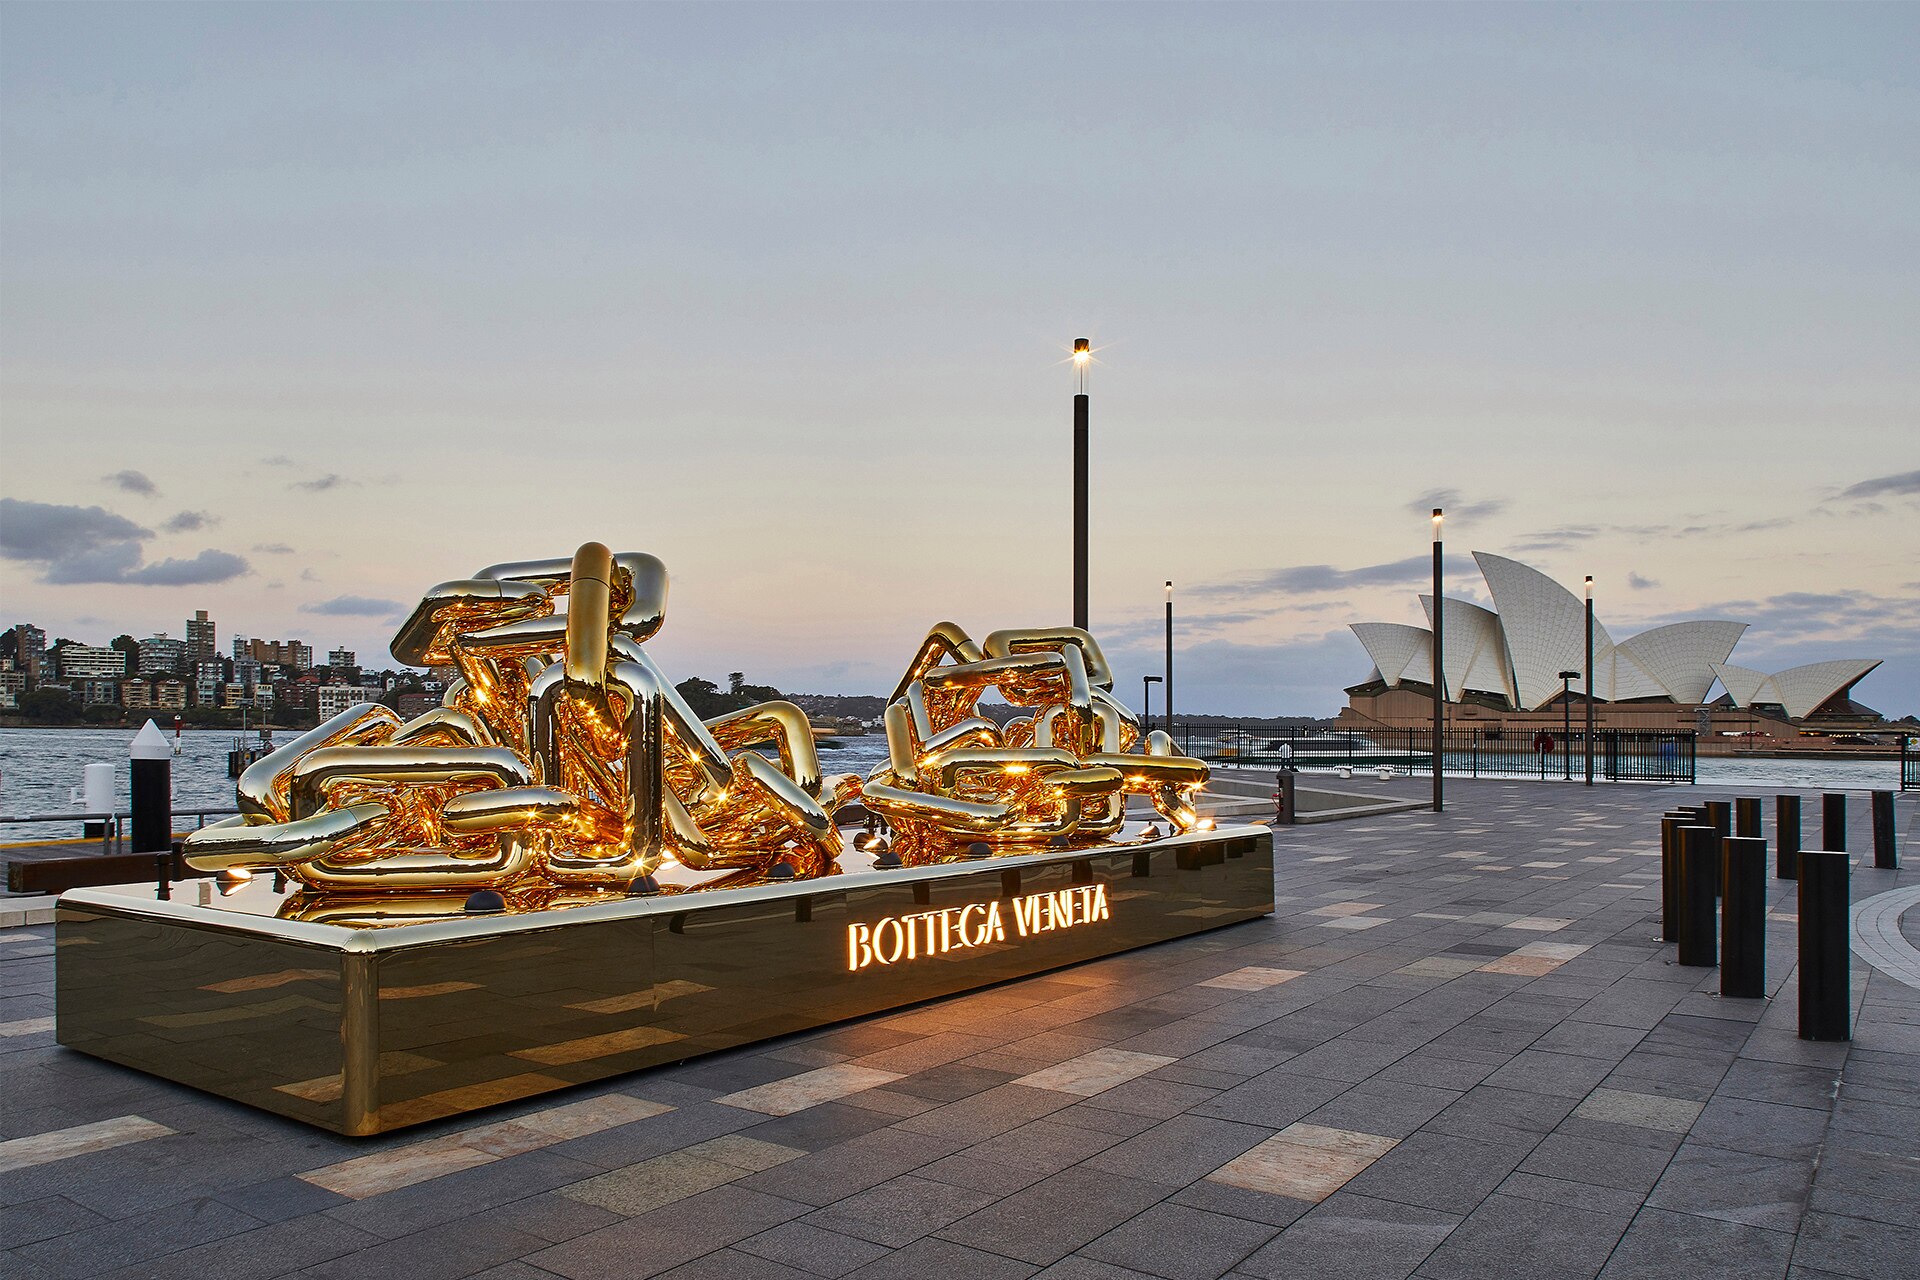 Bottega Veneta's Artful Invasion Of Melbourne